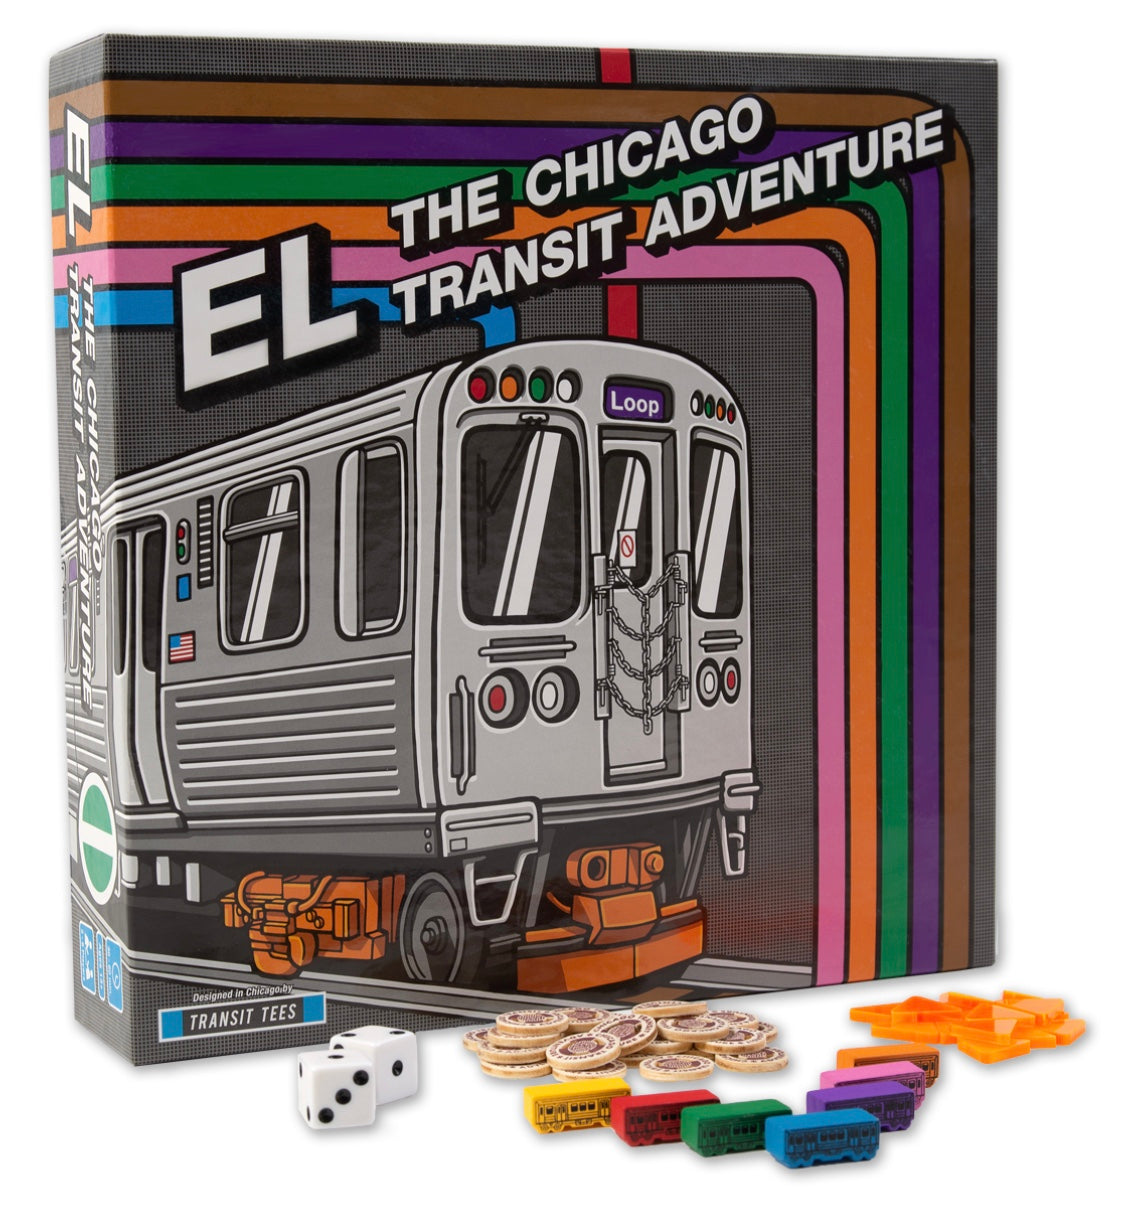 El The Chicago Transit Adventure Board Game - Transit Tees